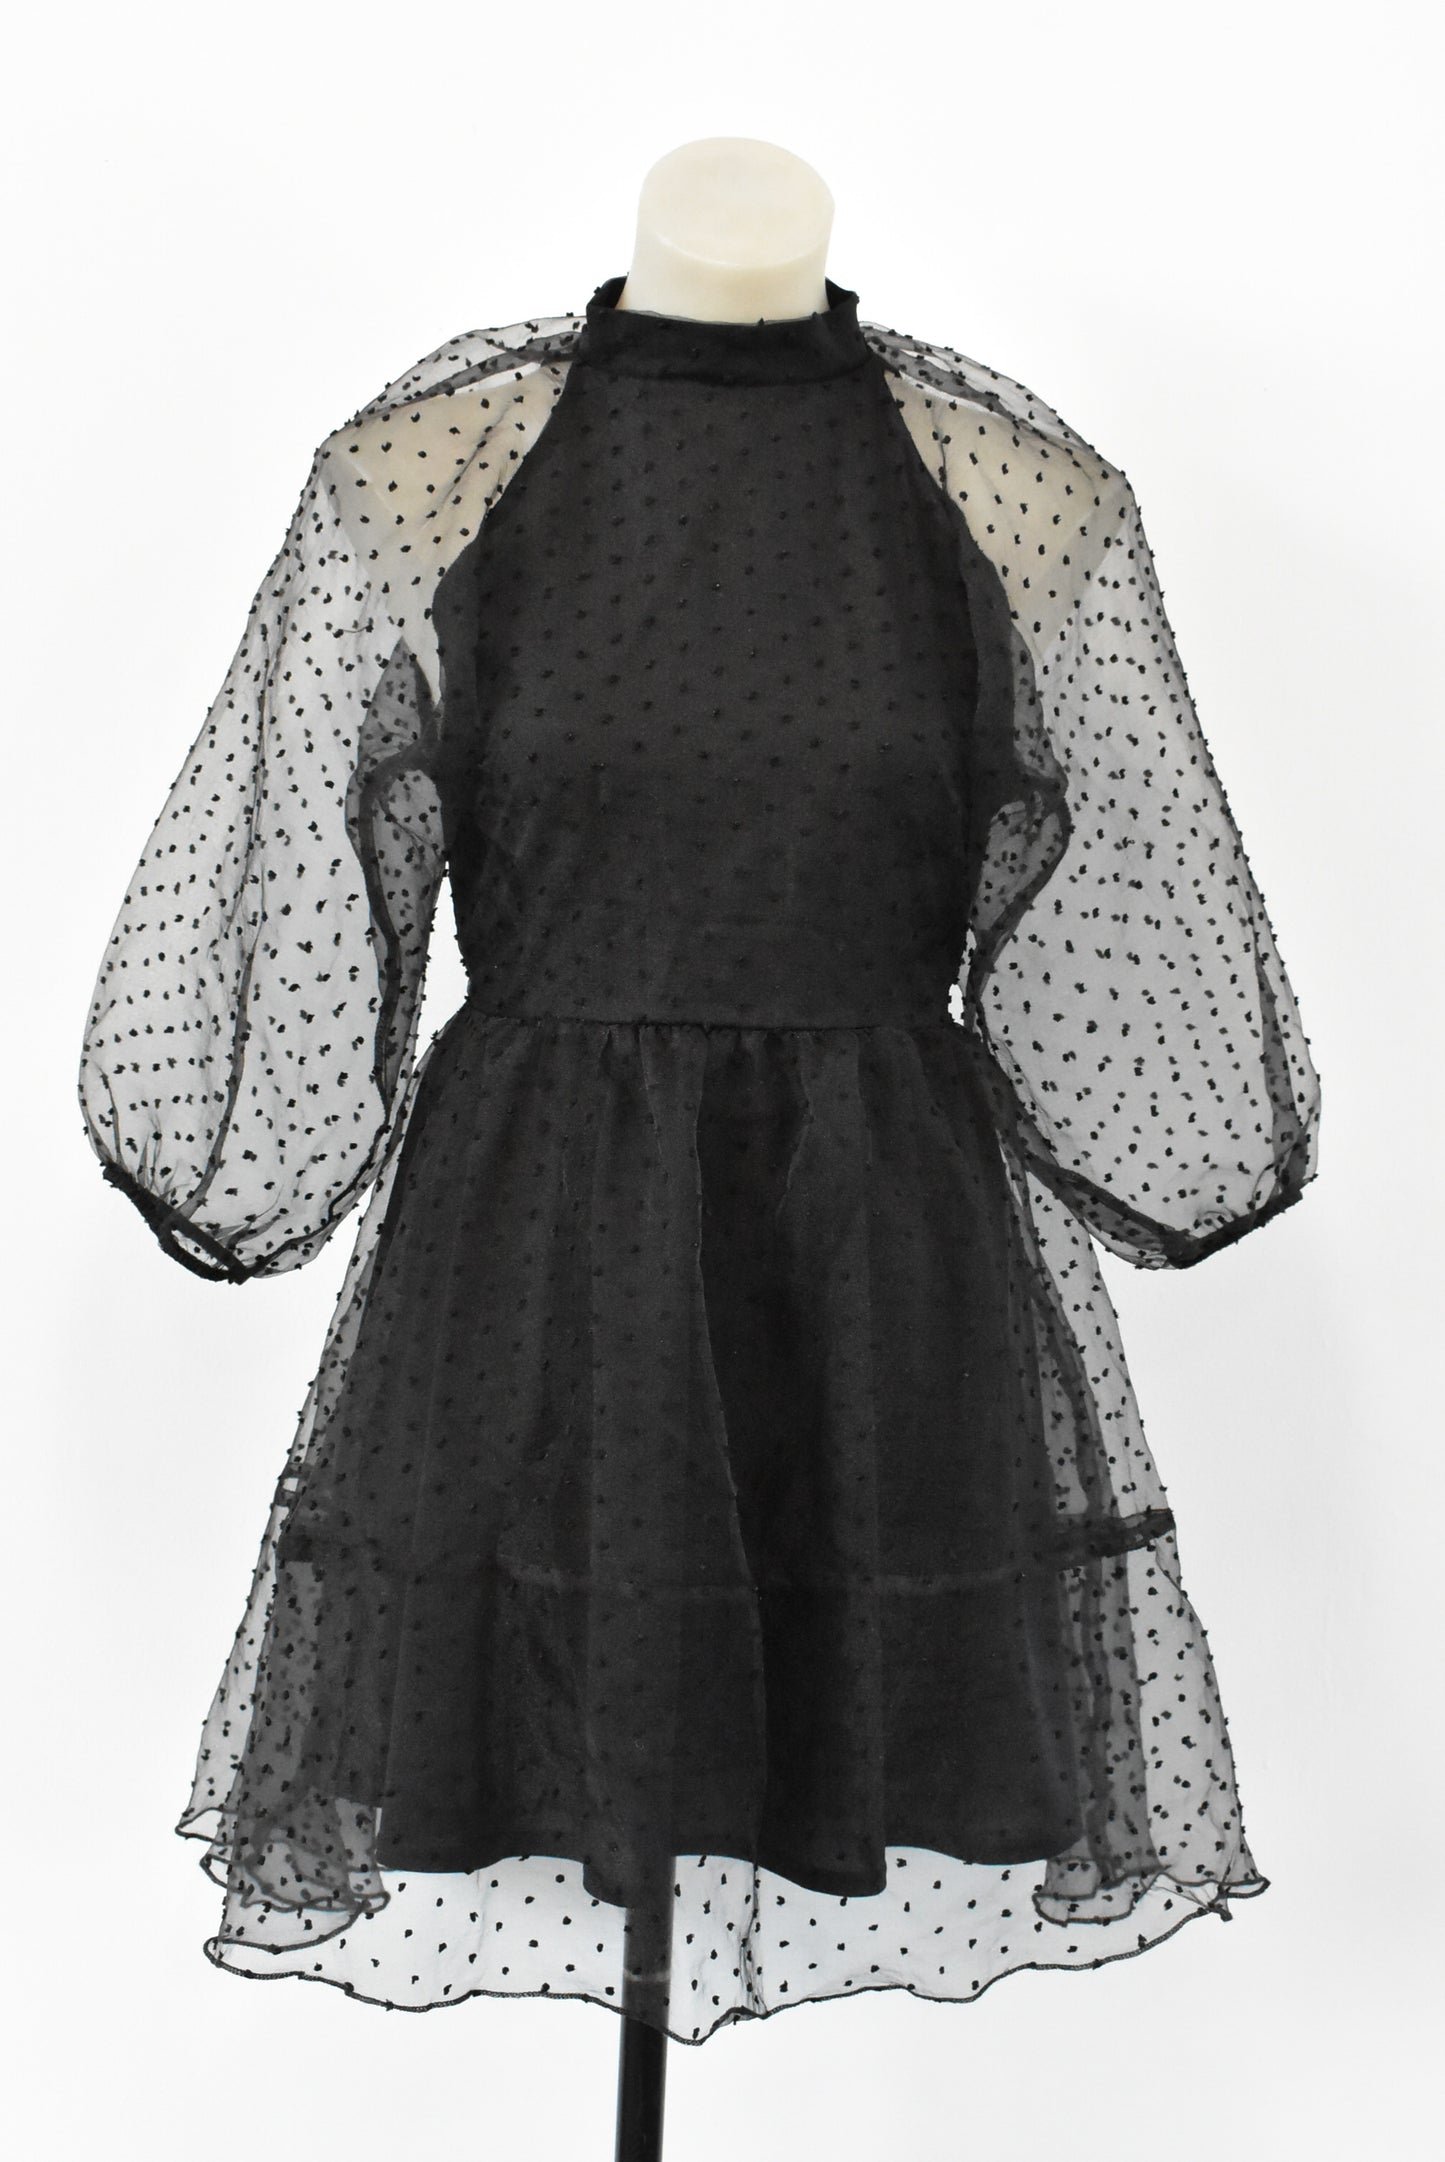 ASOS Design sheer black puff sleeve dress, size 12